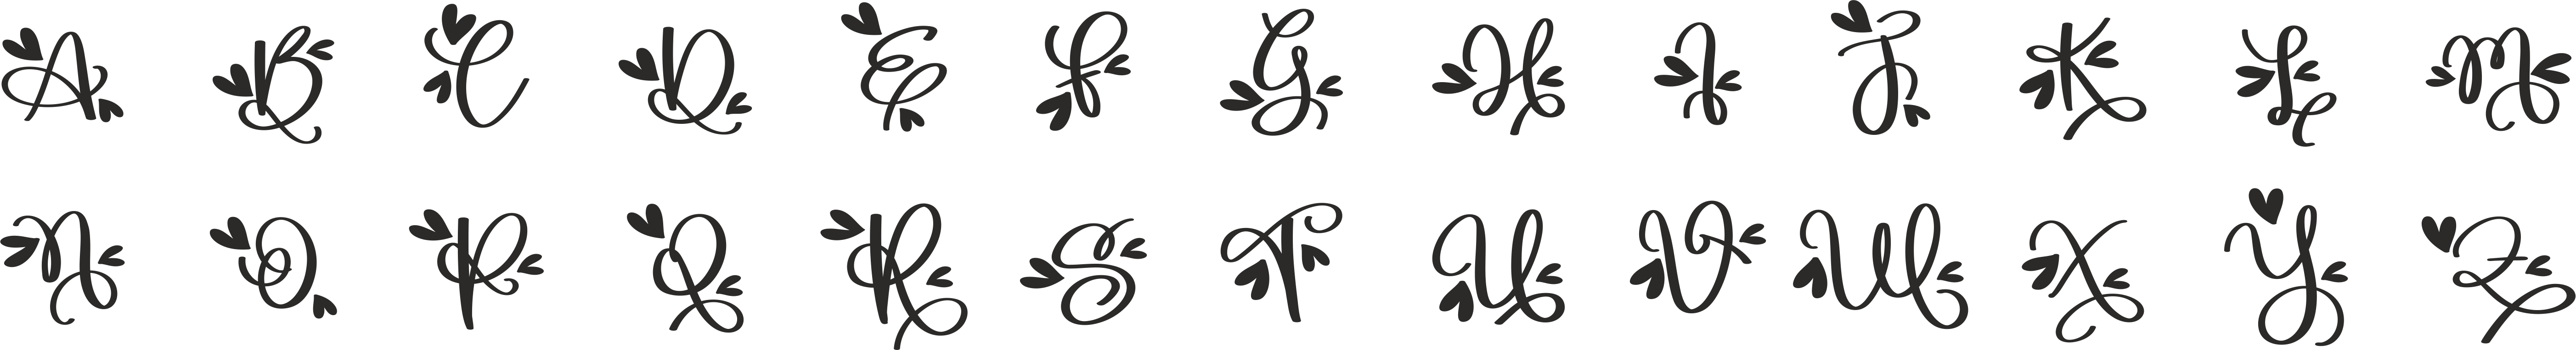 Custom Monogram